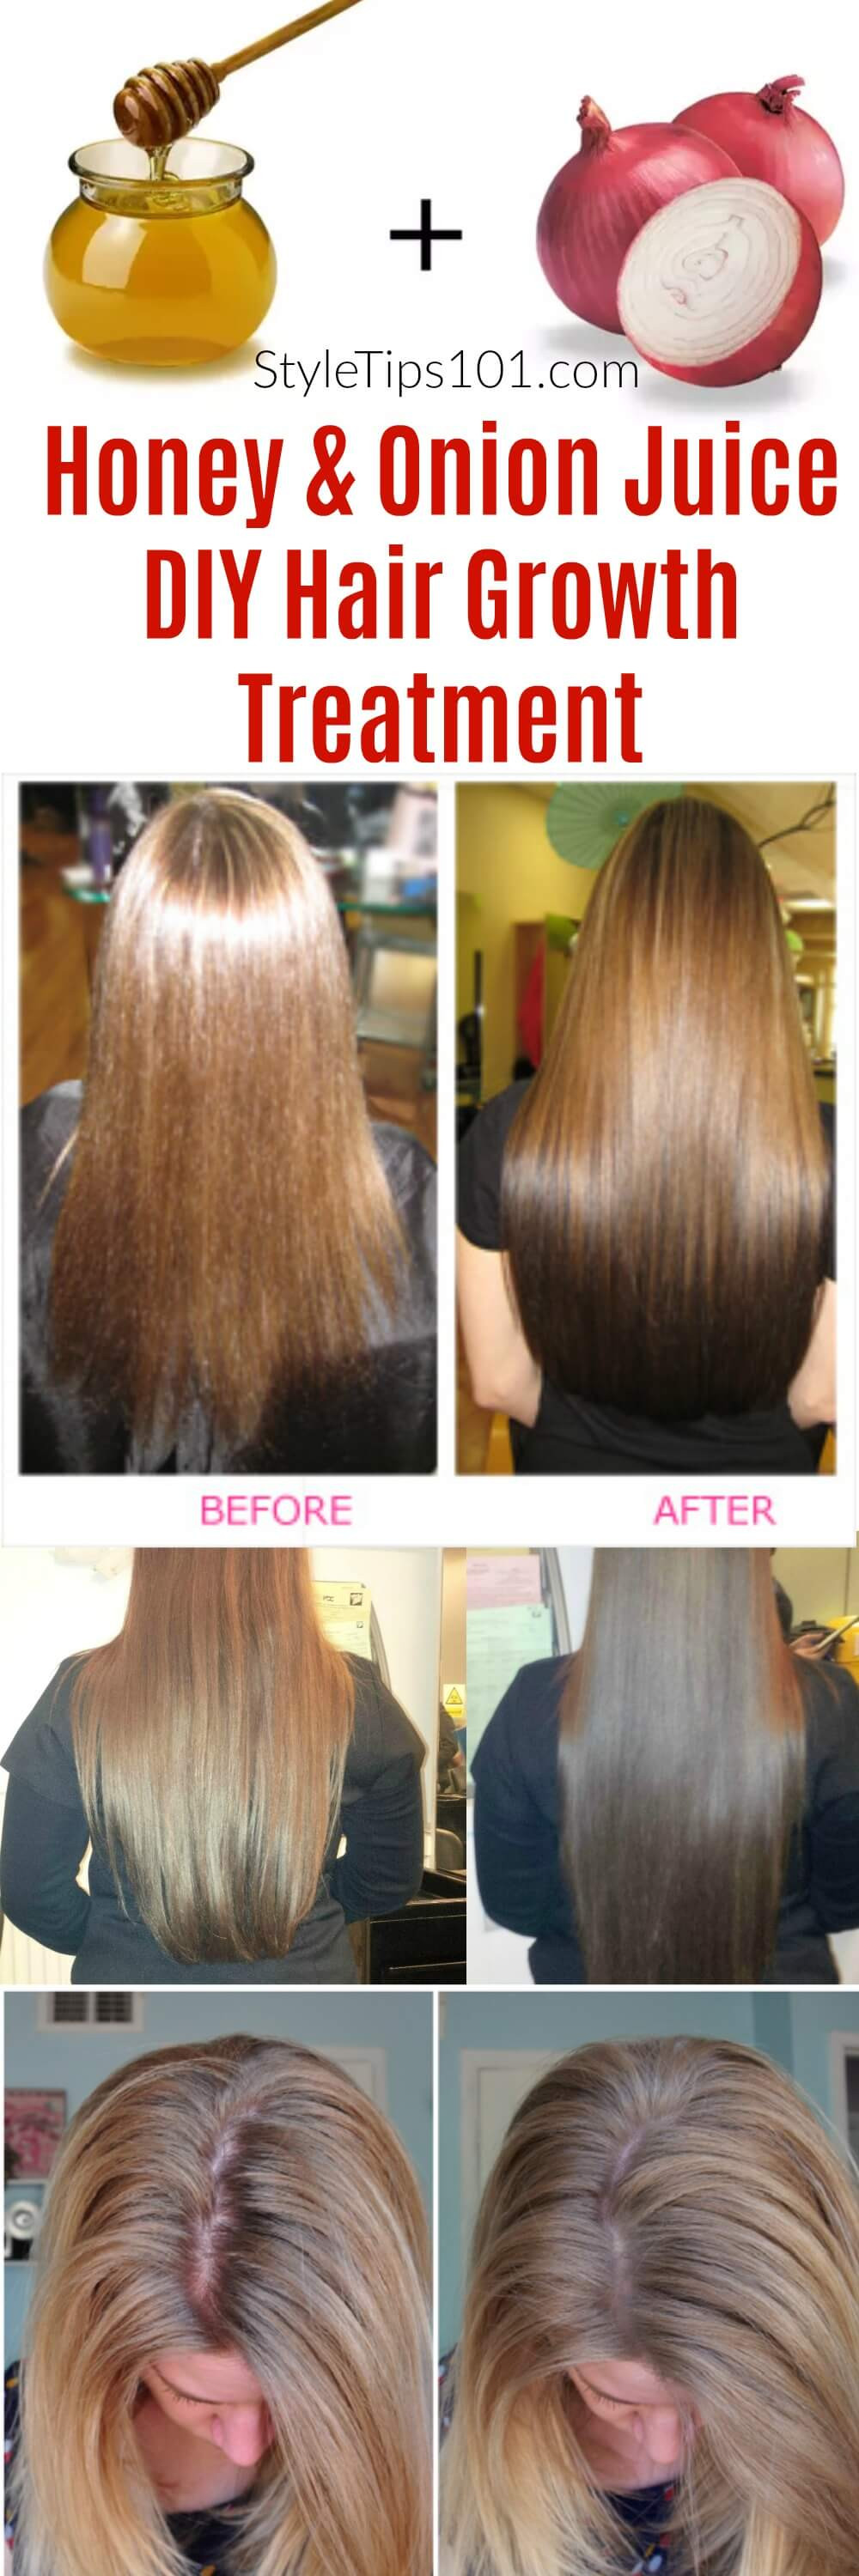 Best ideas about Hair Growth Treatment DIY
. Save or Pin ion Juice & Honey DIY Hair Growth Treatment Now.